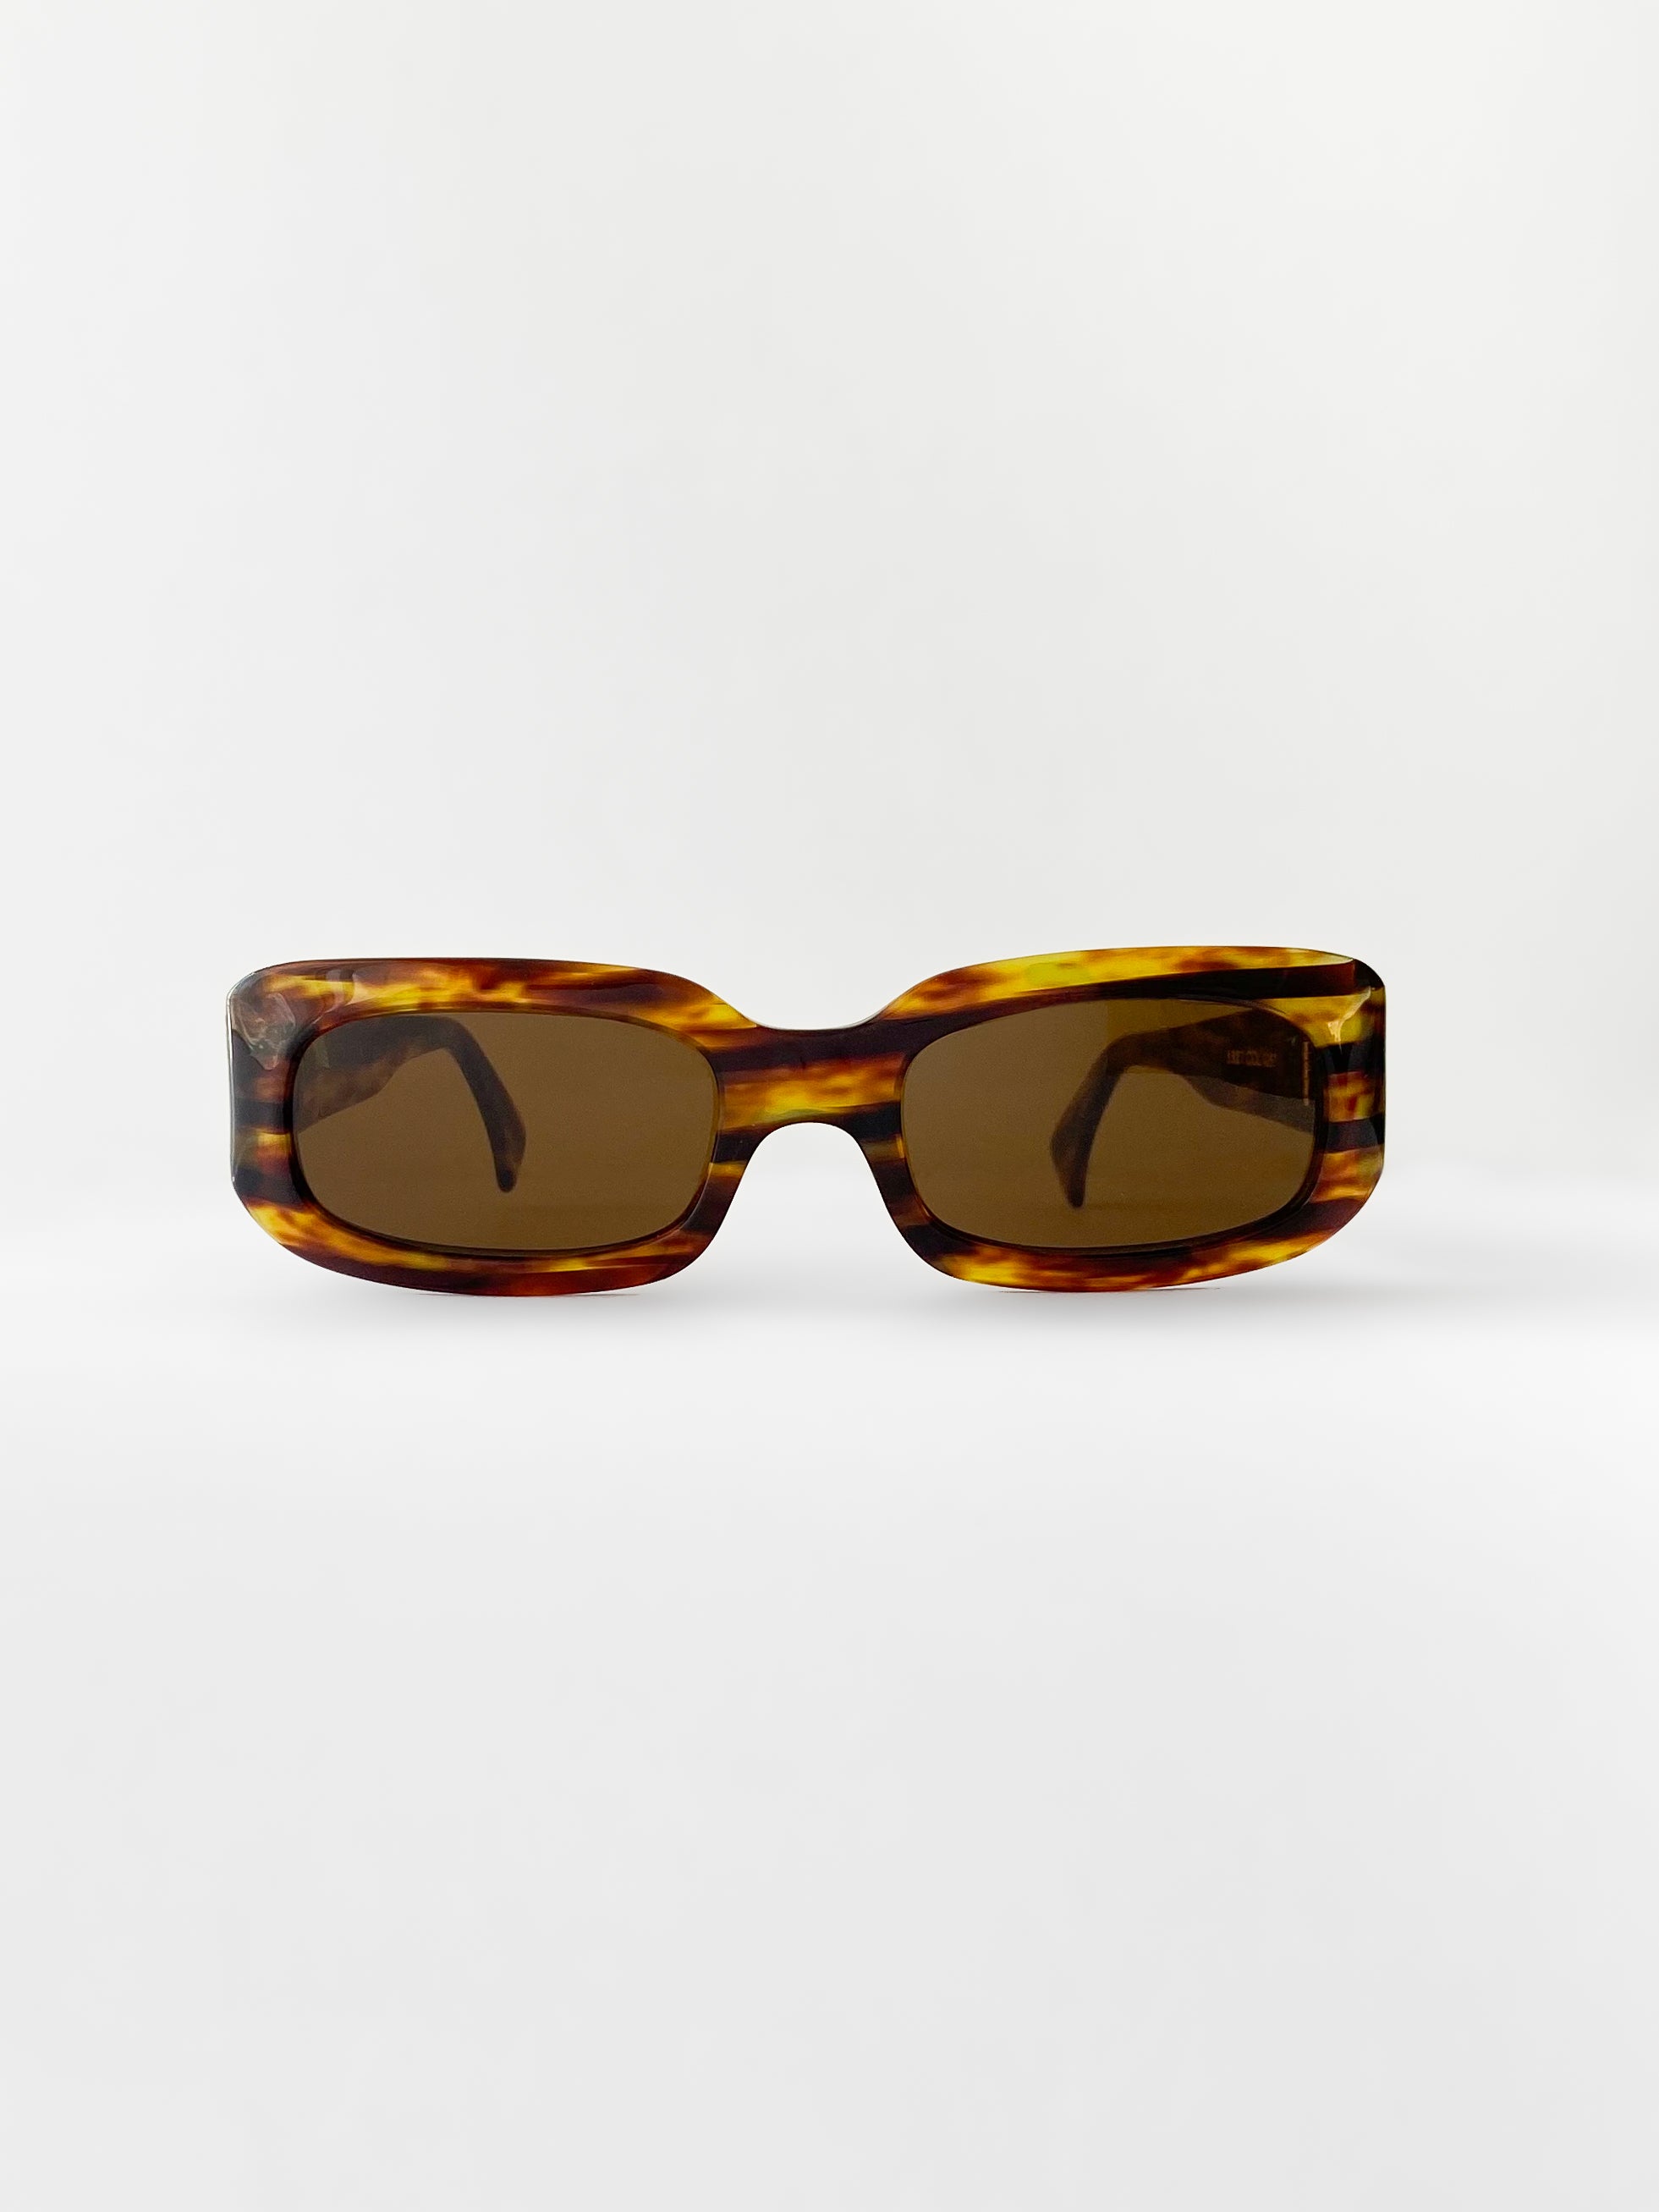 70's Alain Mikli sunglasses